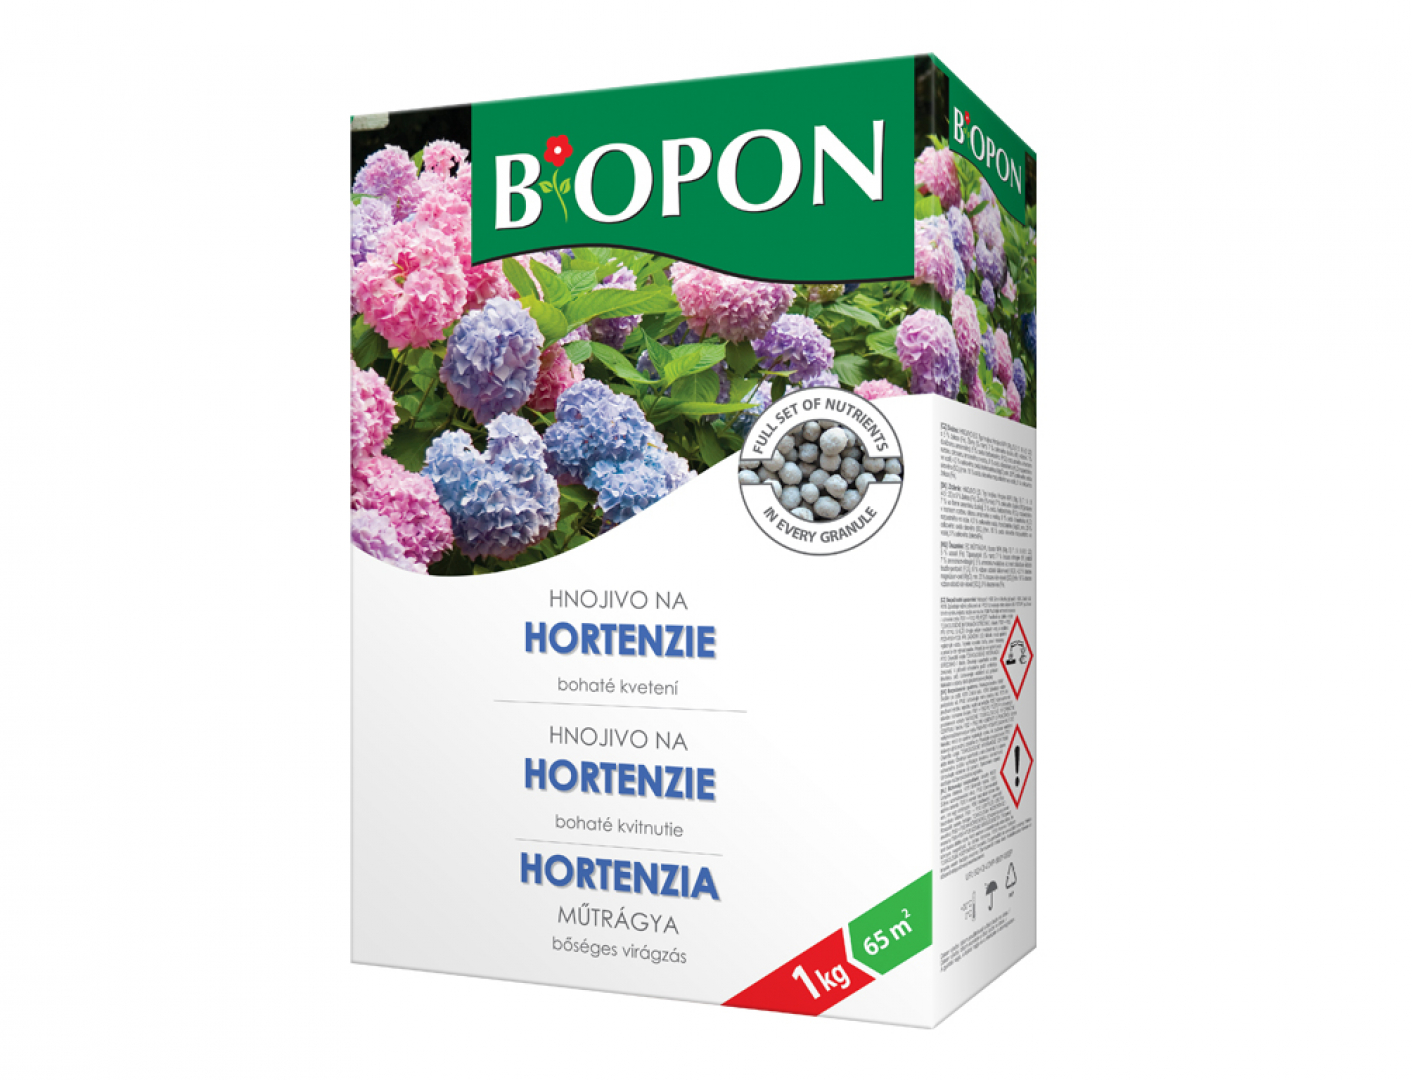 BOPON Hortenzie 1kg